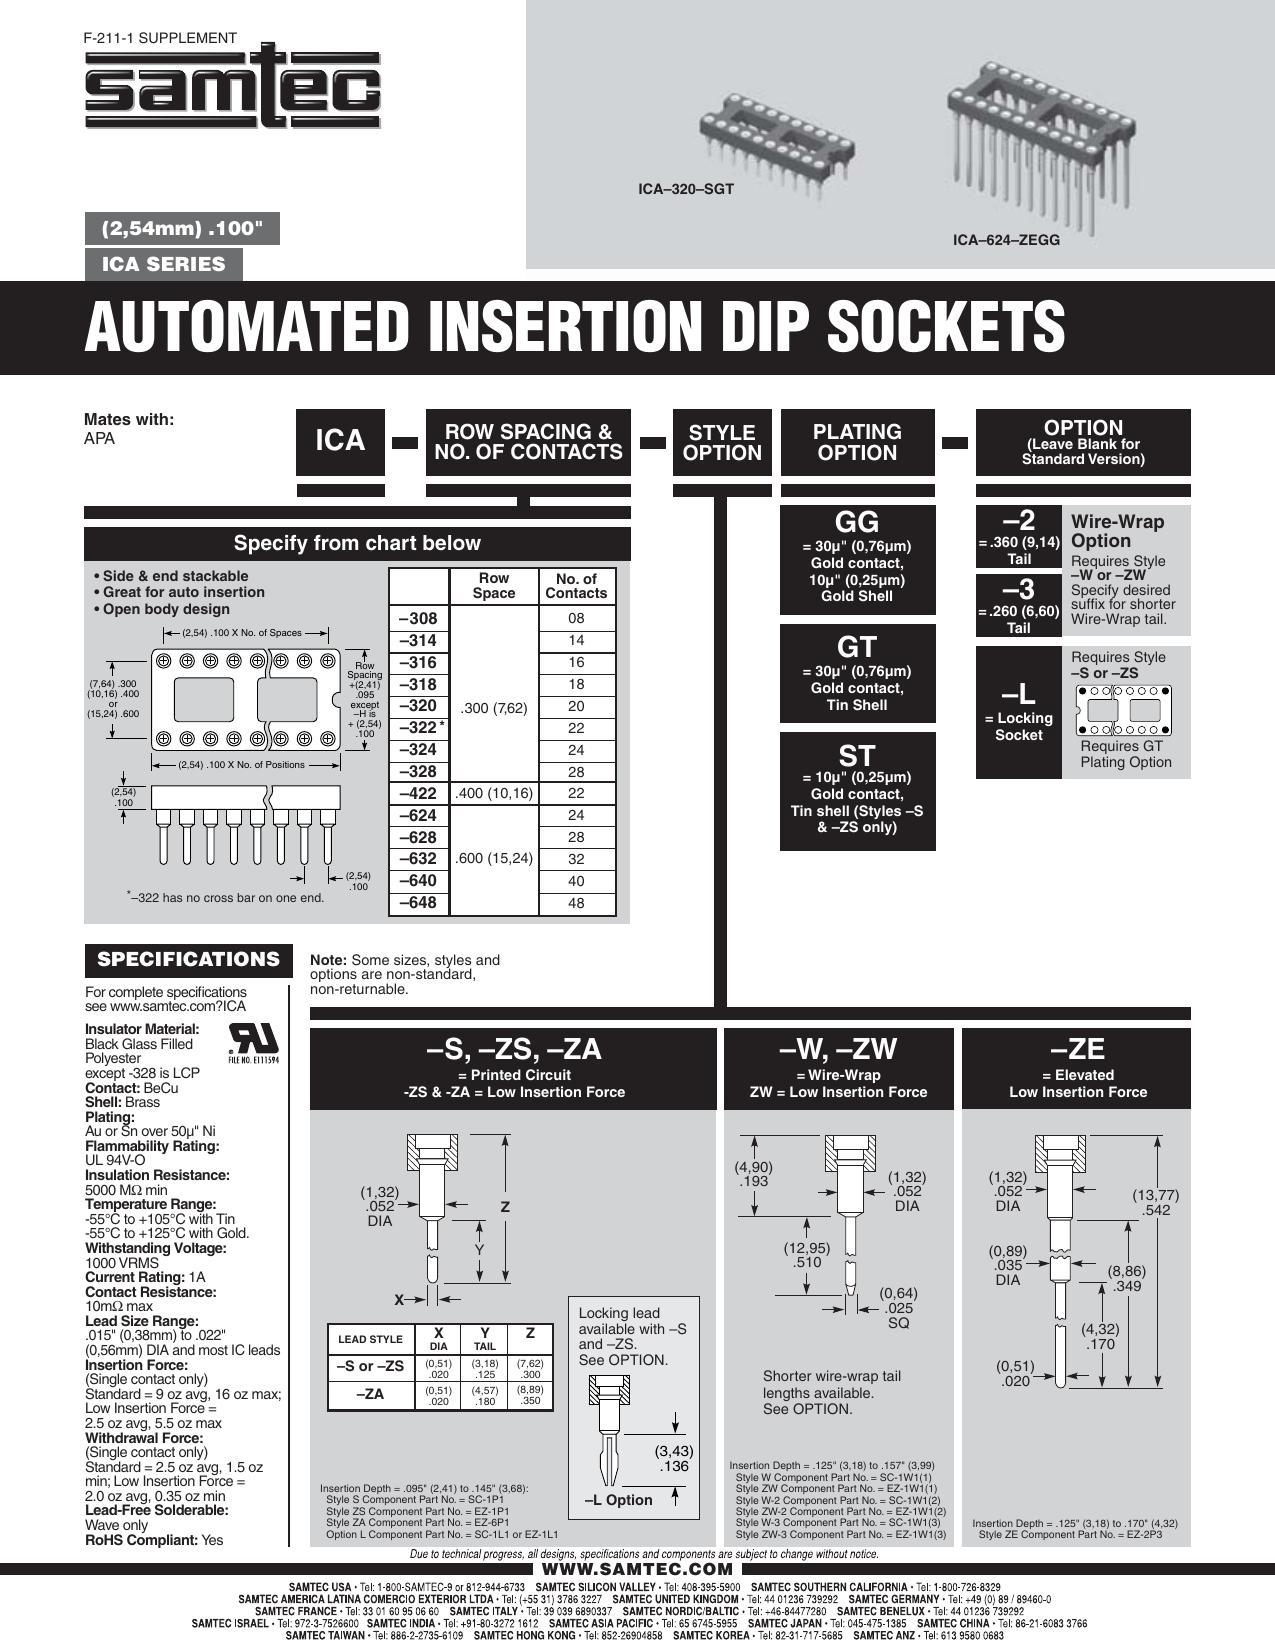 ica-series-automated-insertion-dip-sockets-datasheet.pdf